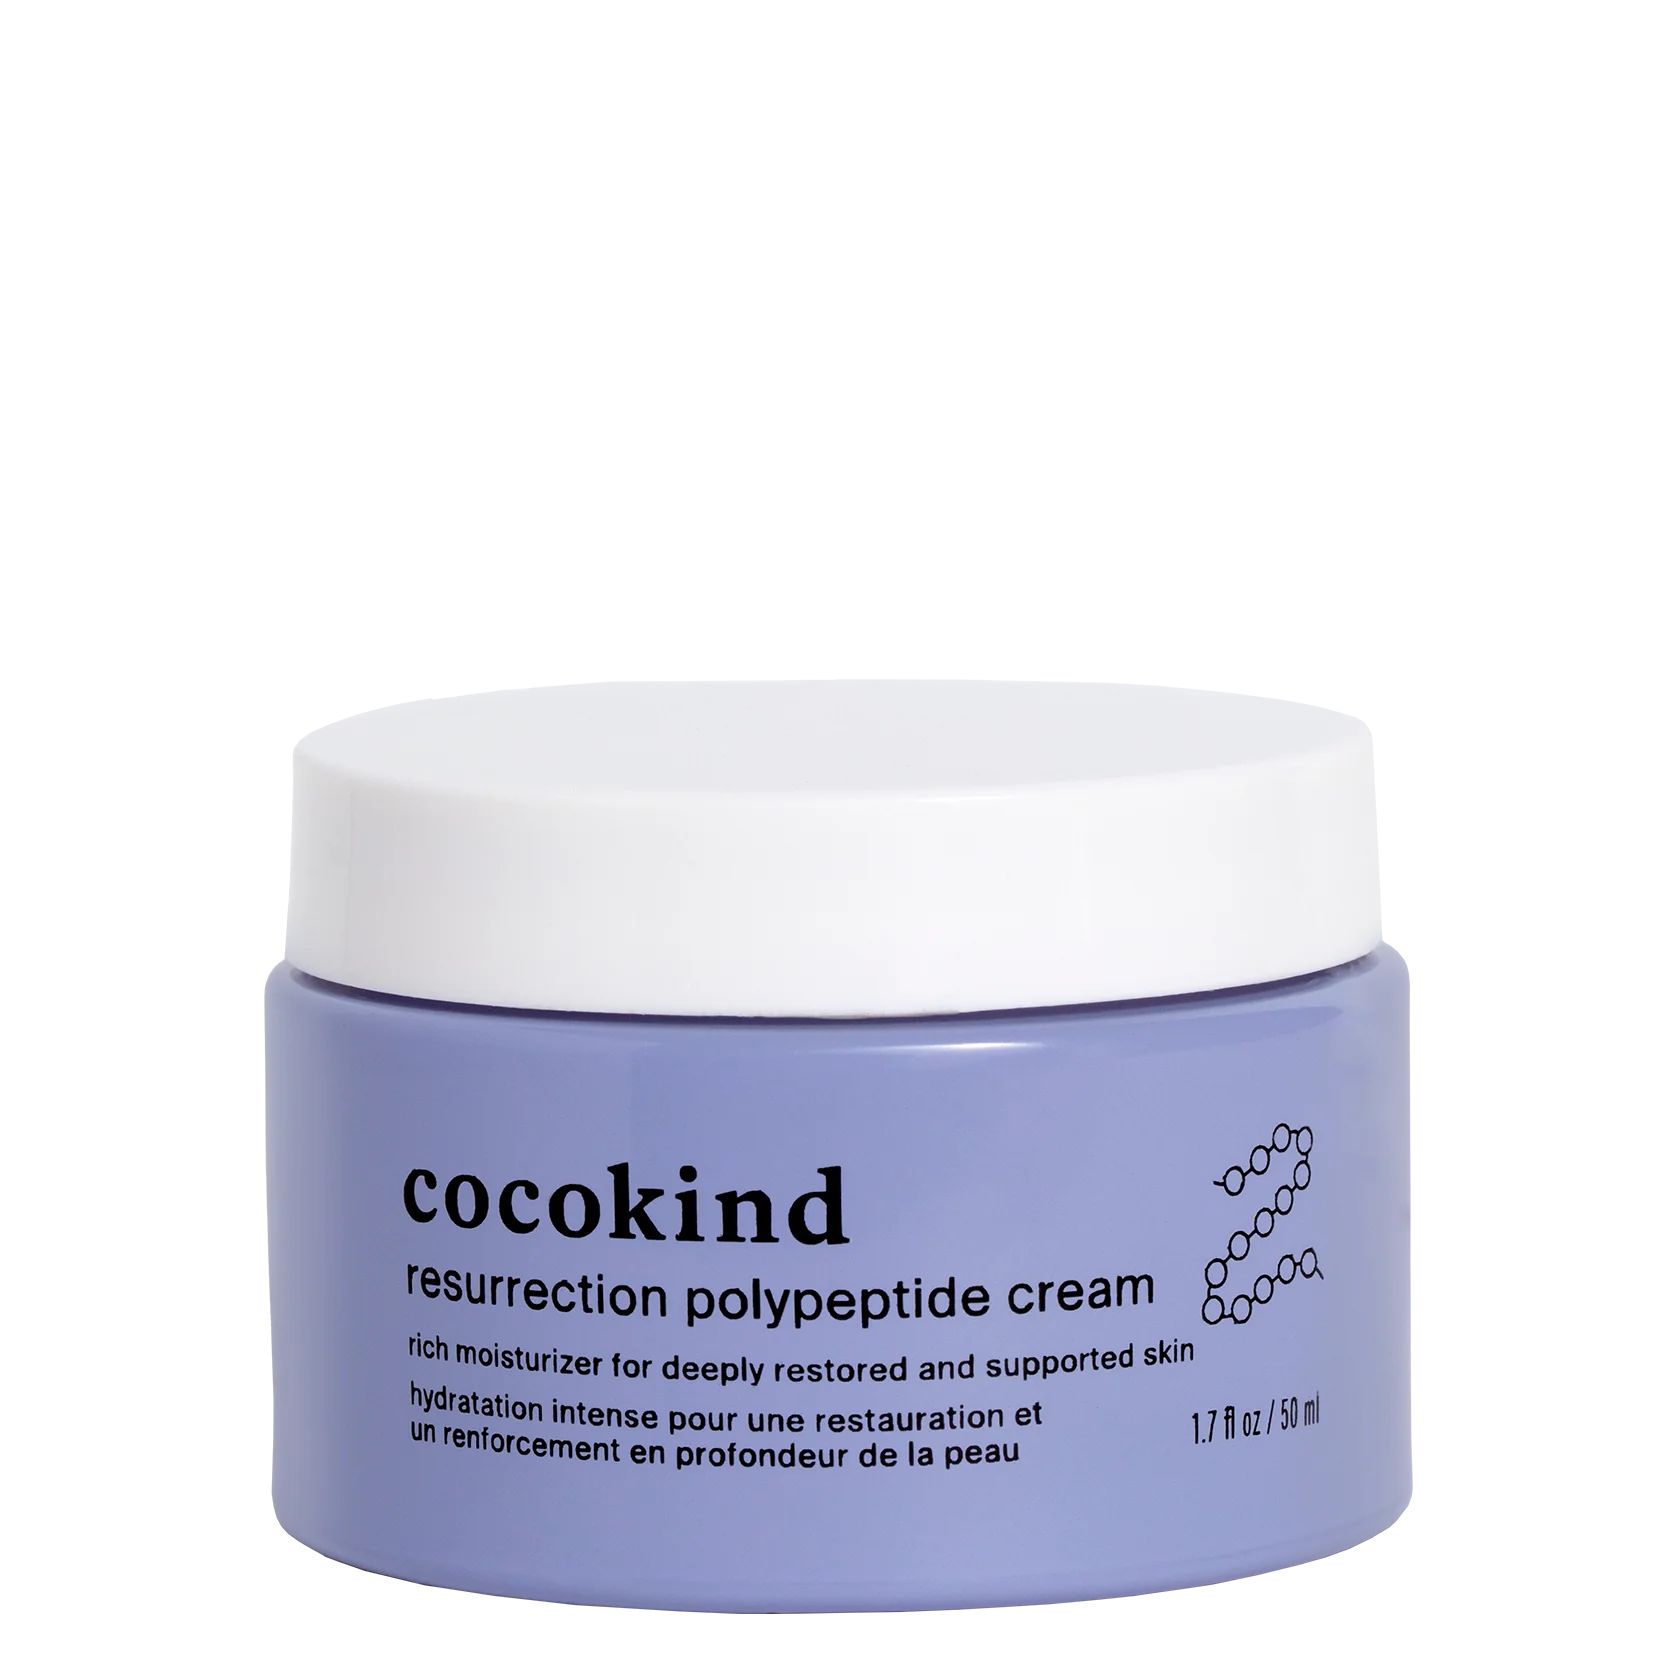 resurrection polypeptide cream | Cocokind